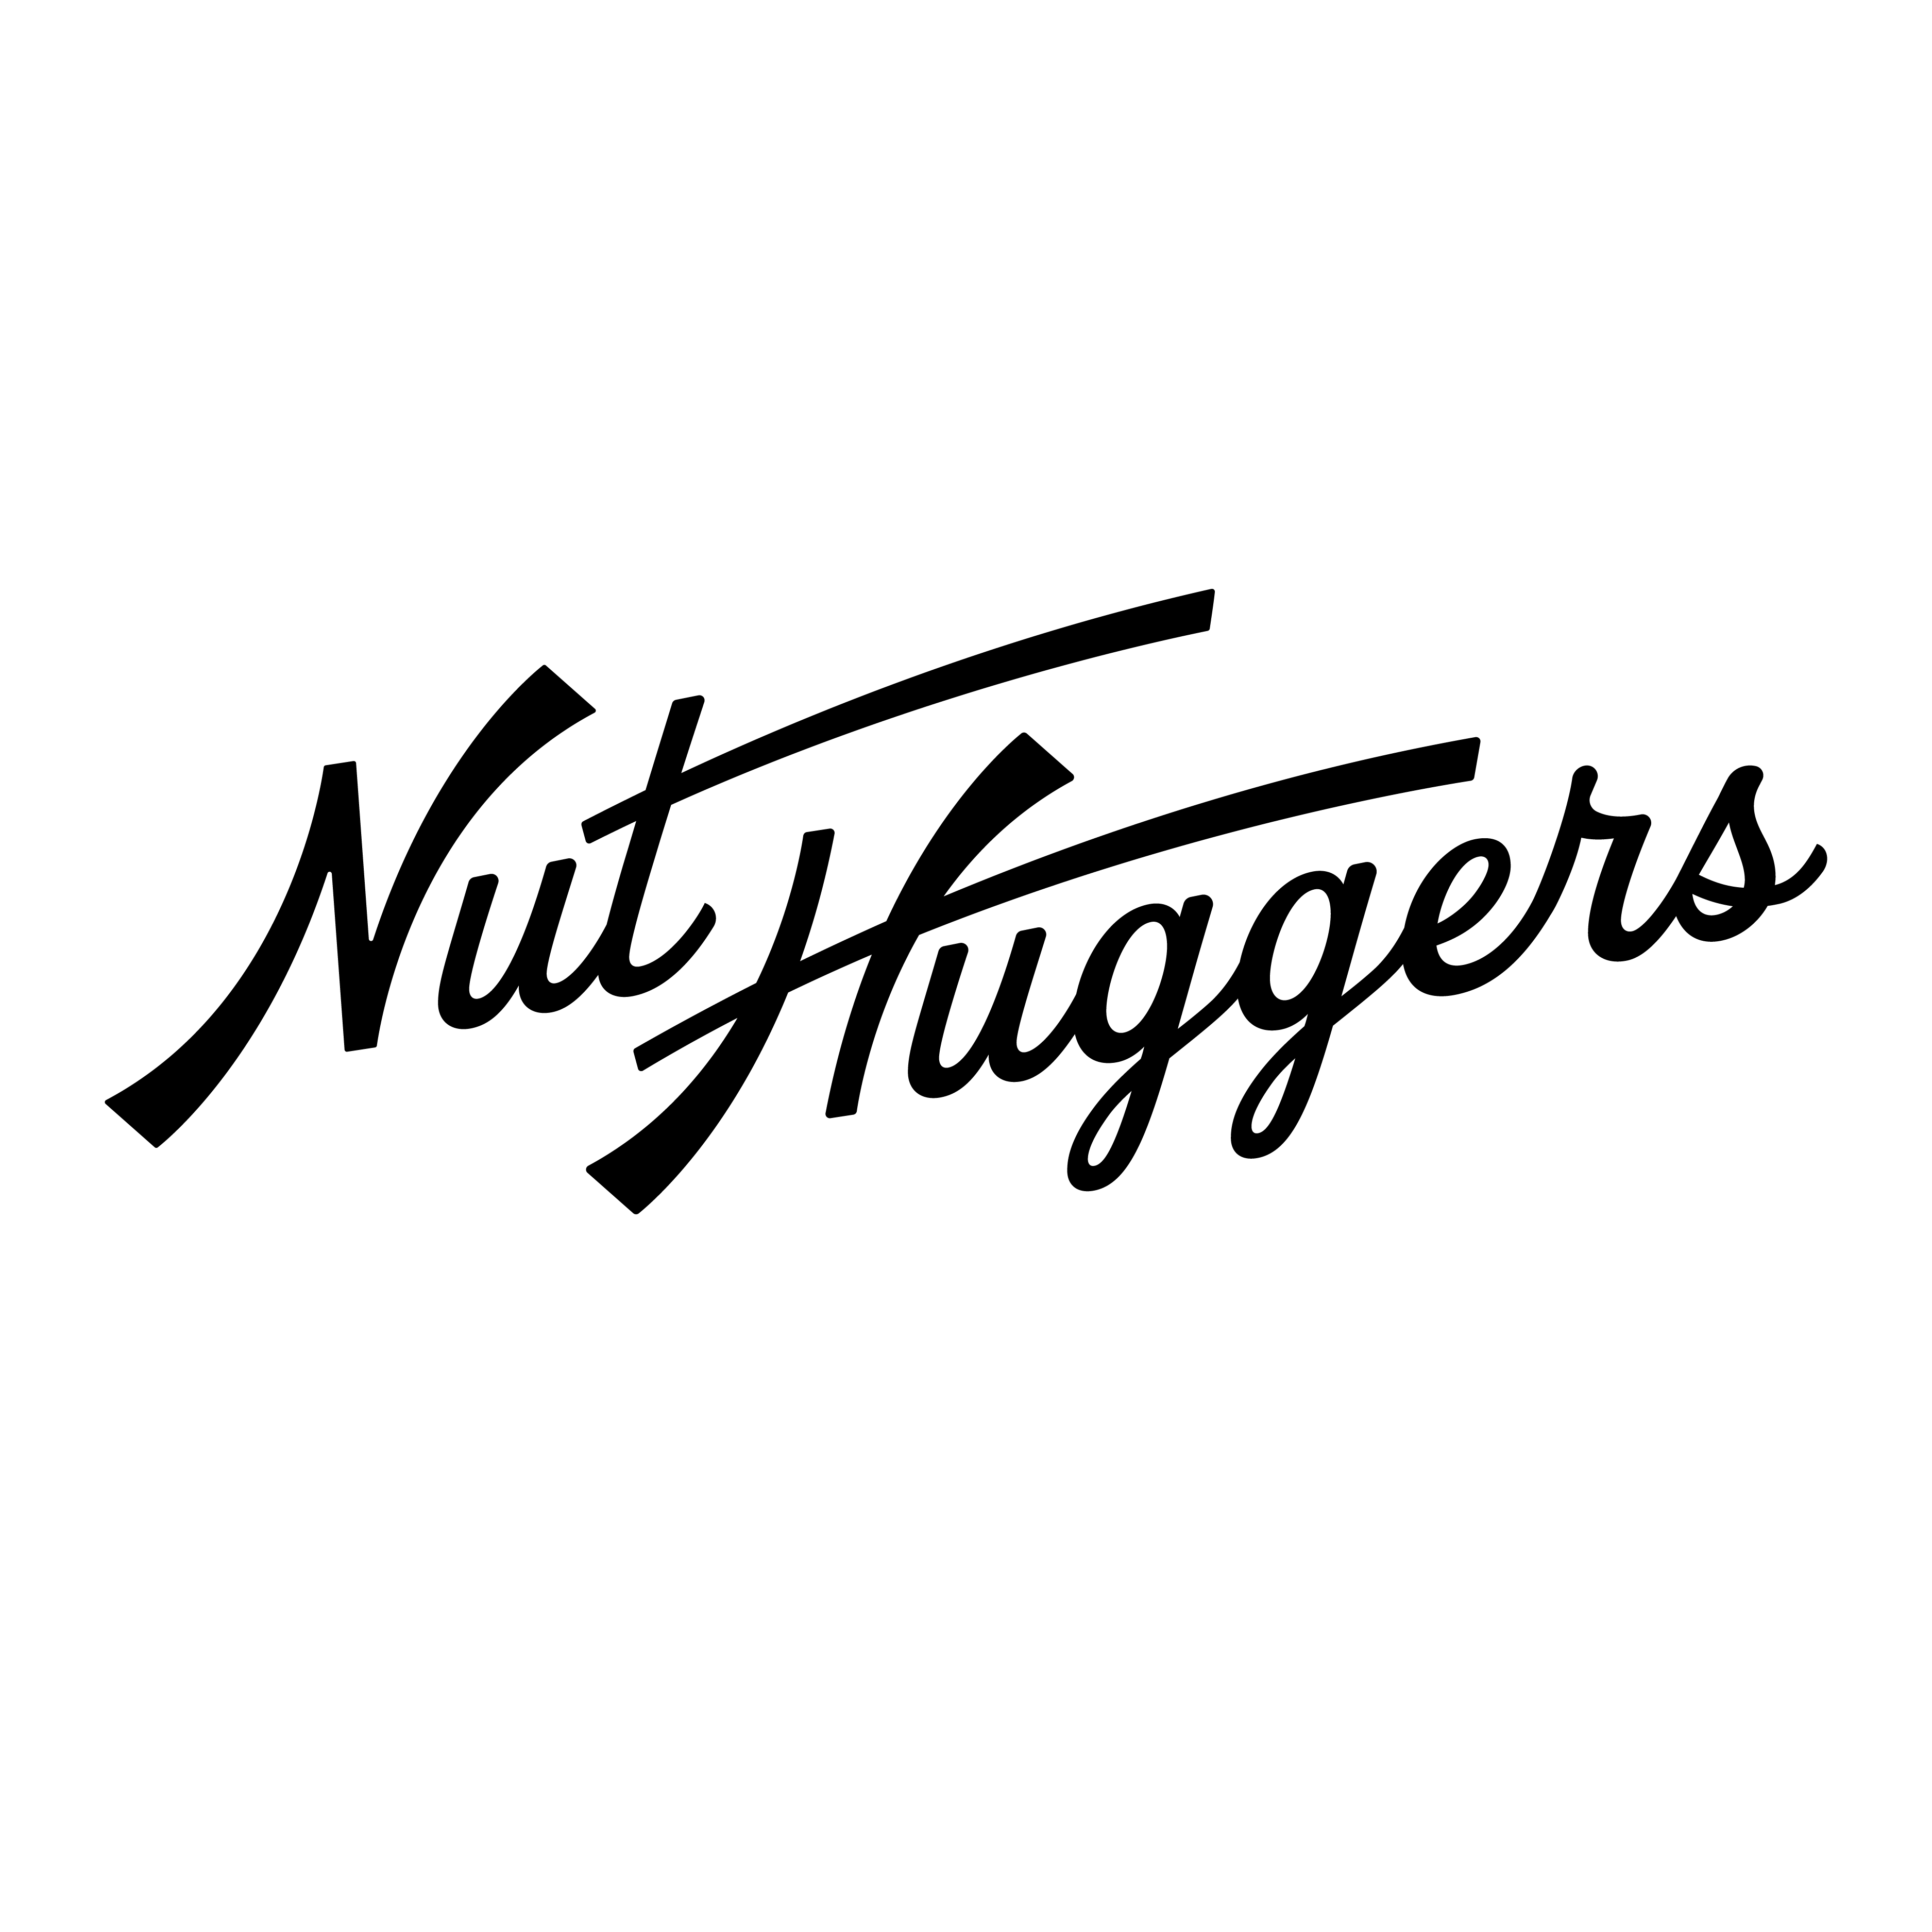 Nut Hugger Script  logo design by logo designer Brethren Design Co. for your inspiration and for the worlds largest logo competition